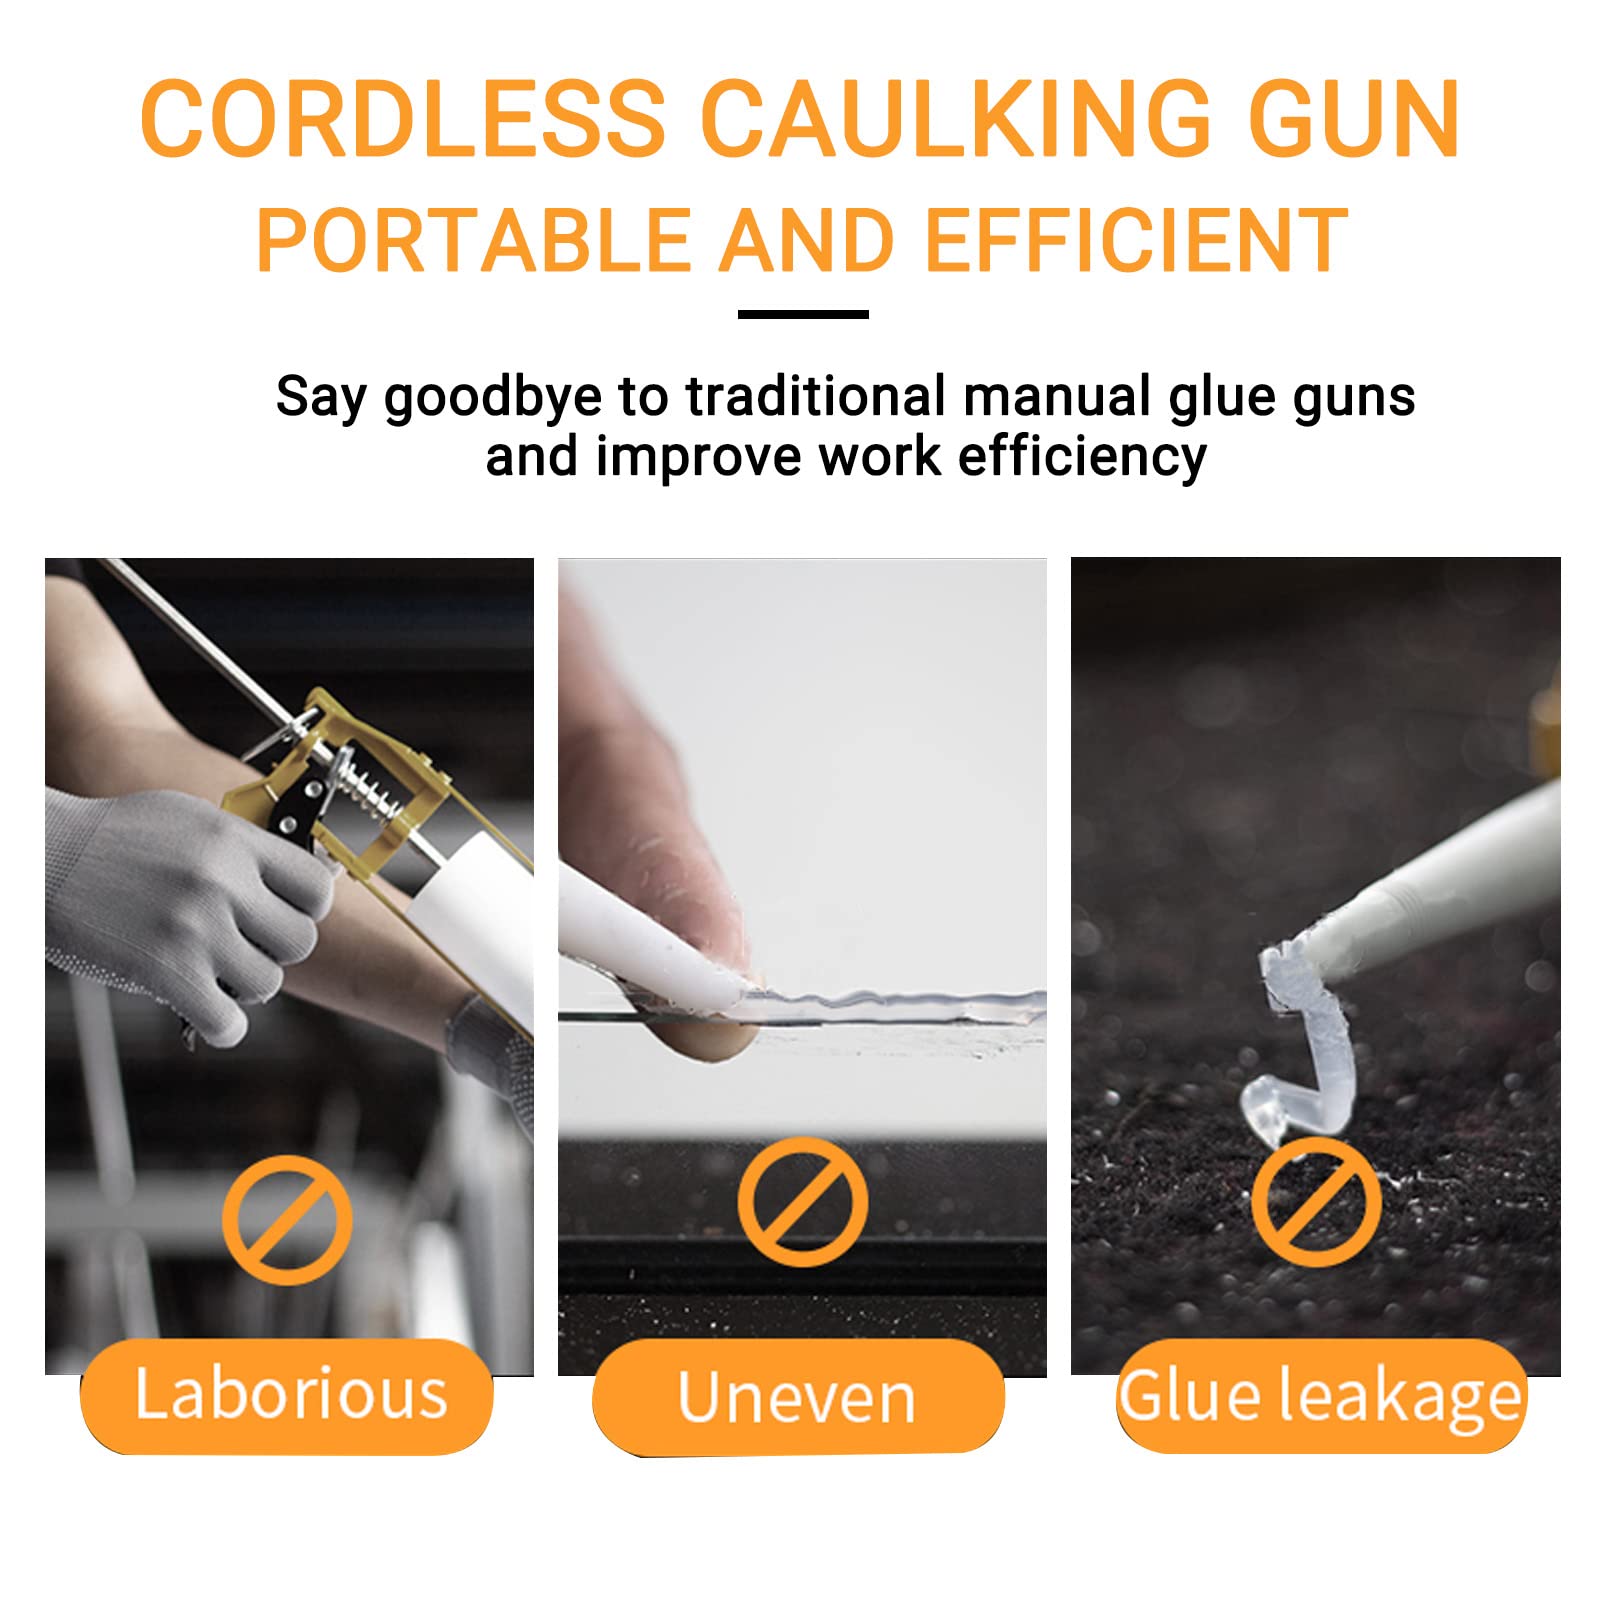 Cordless Caulking Gun, 21V Hand-held Cordless Electric Caulking Gun Kit, Equipped With 2.0 Ah Battery and Charger